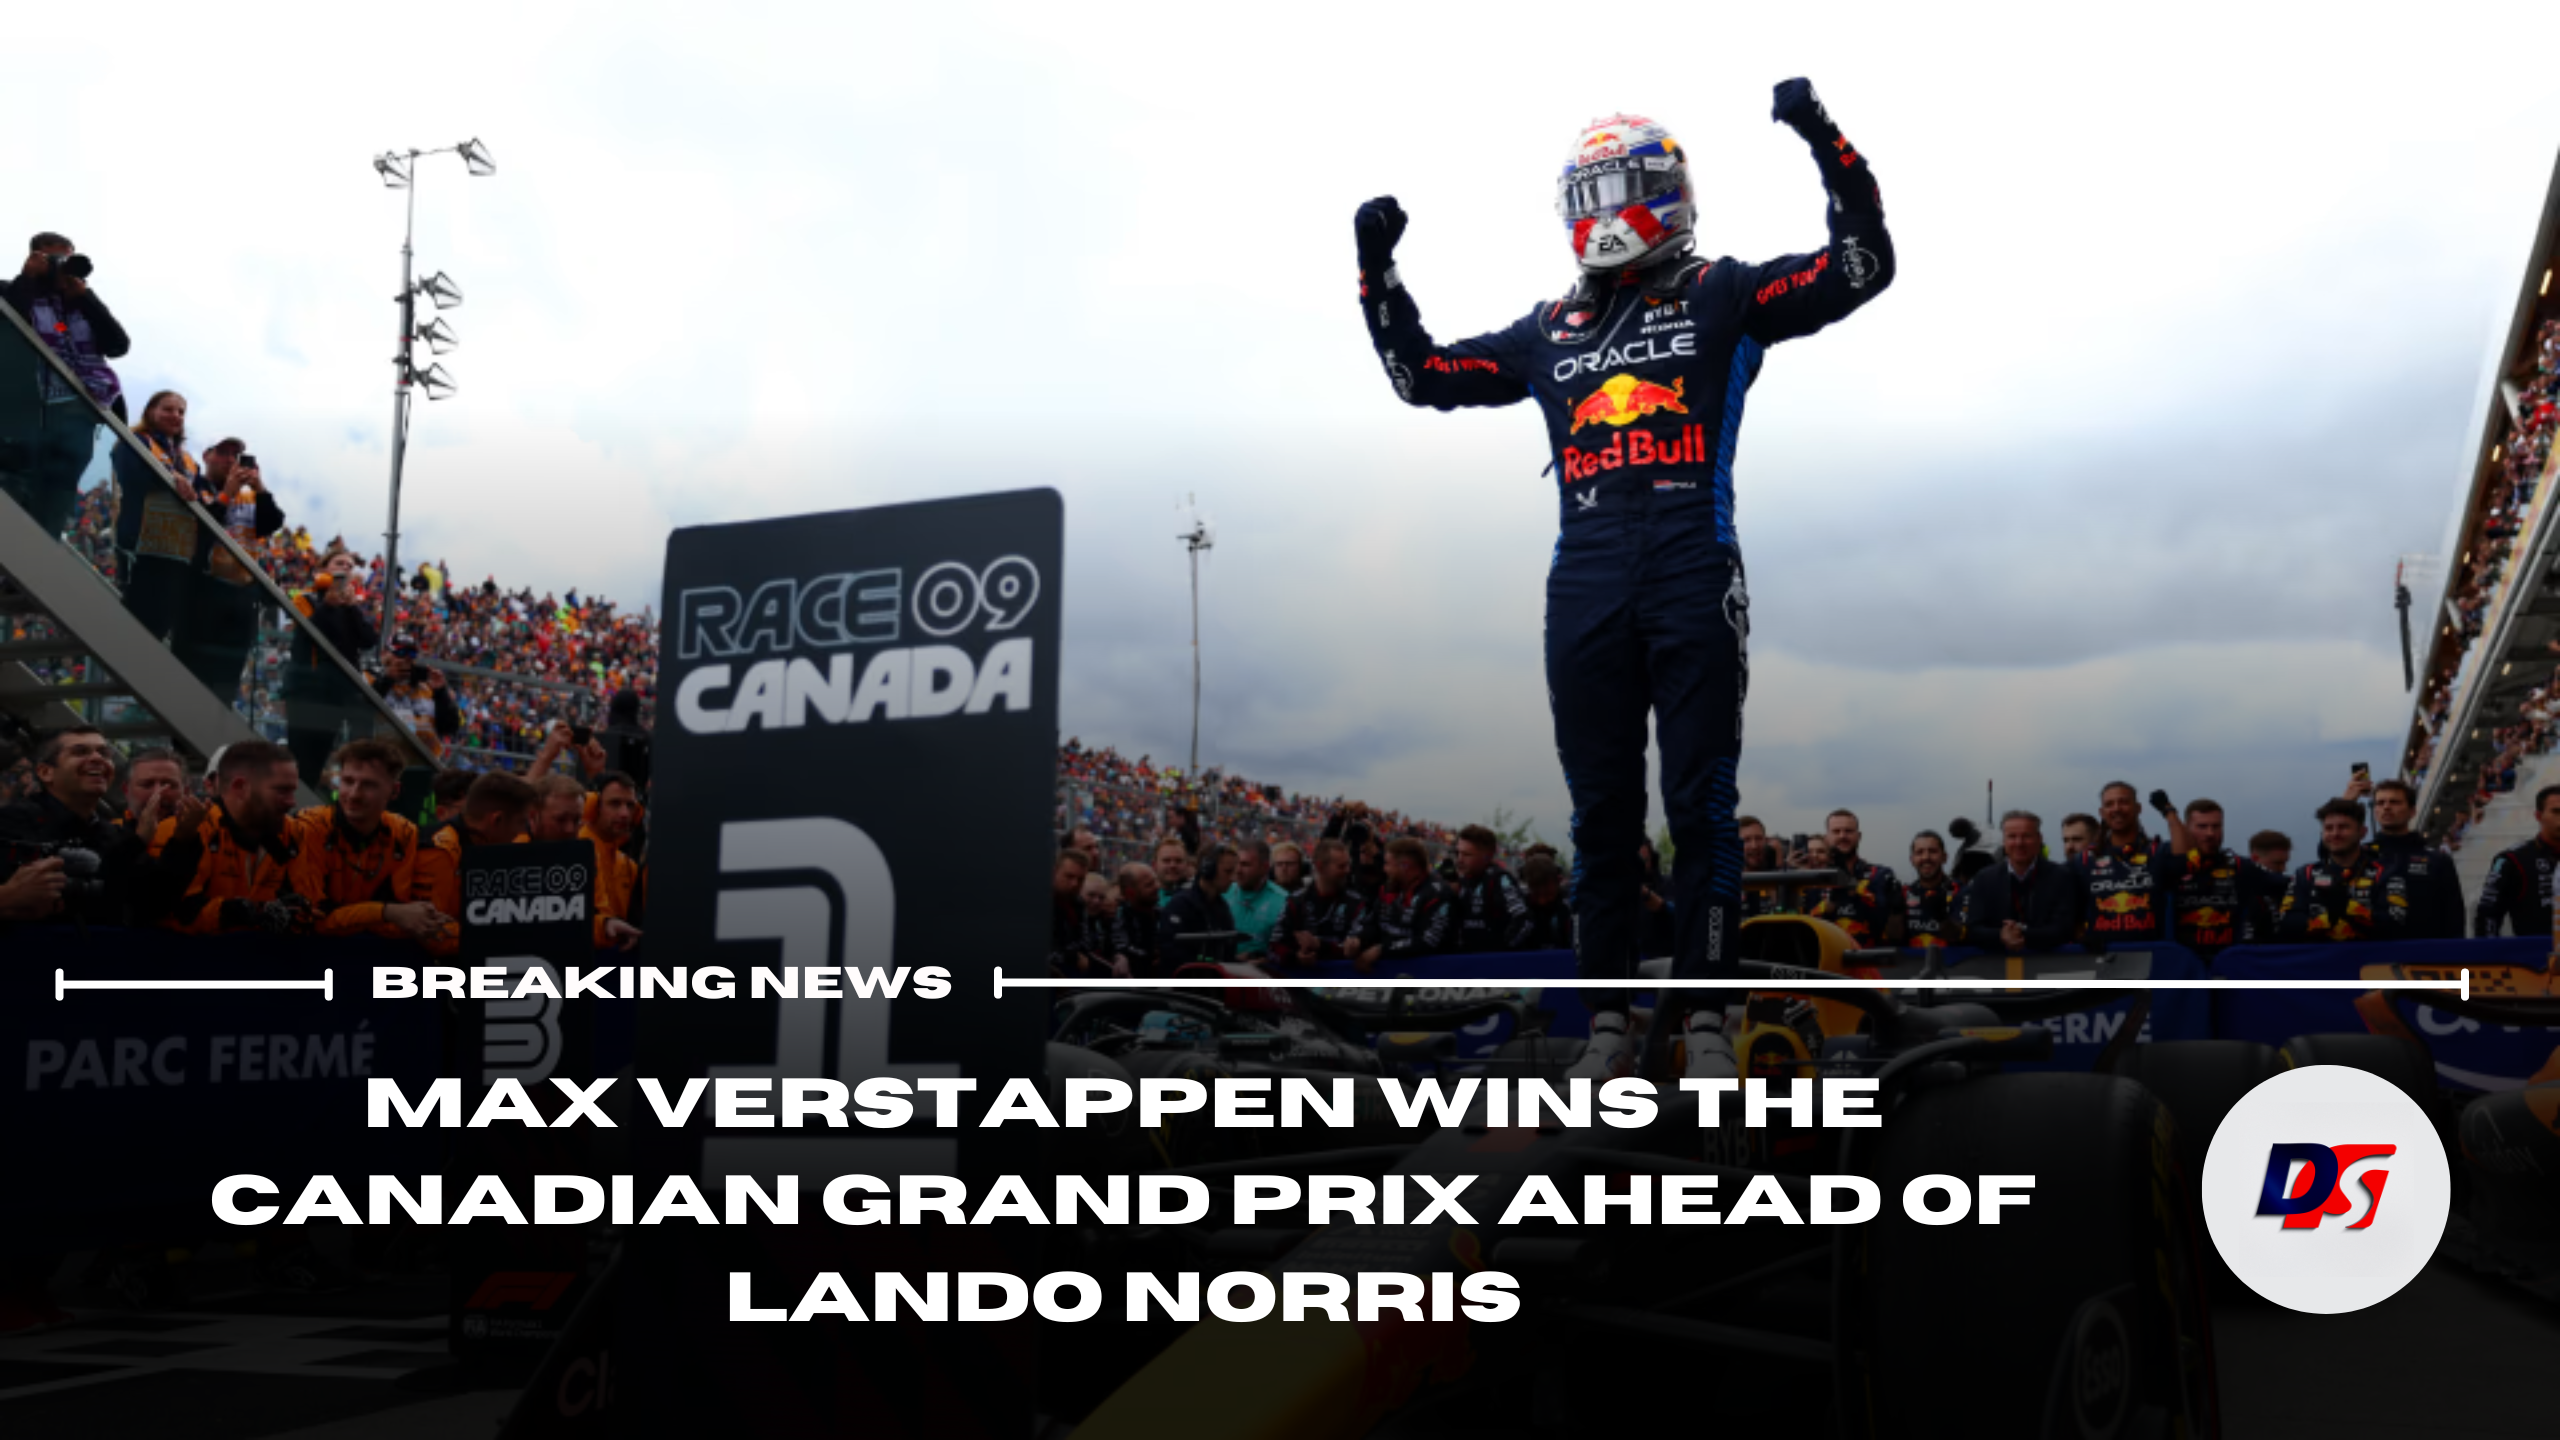 Max Verstappen wins the Canadian Grand Prix ahead of Lando Norris